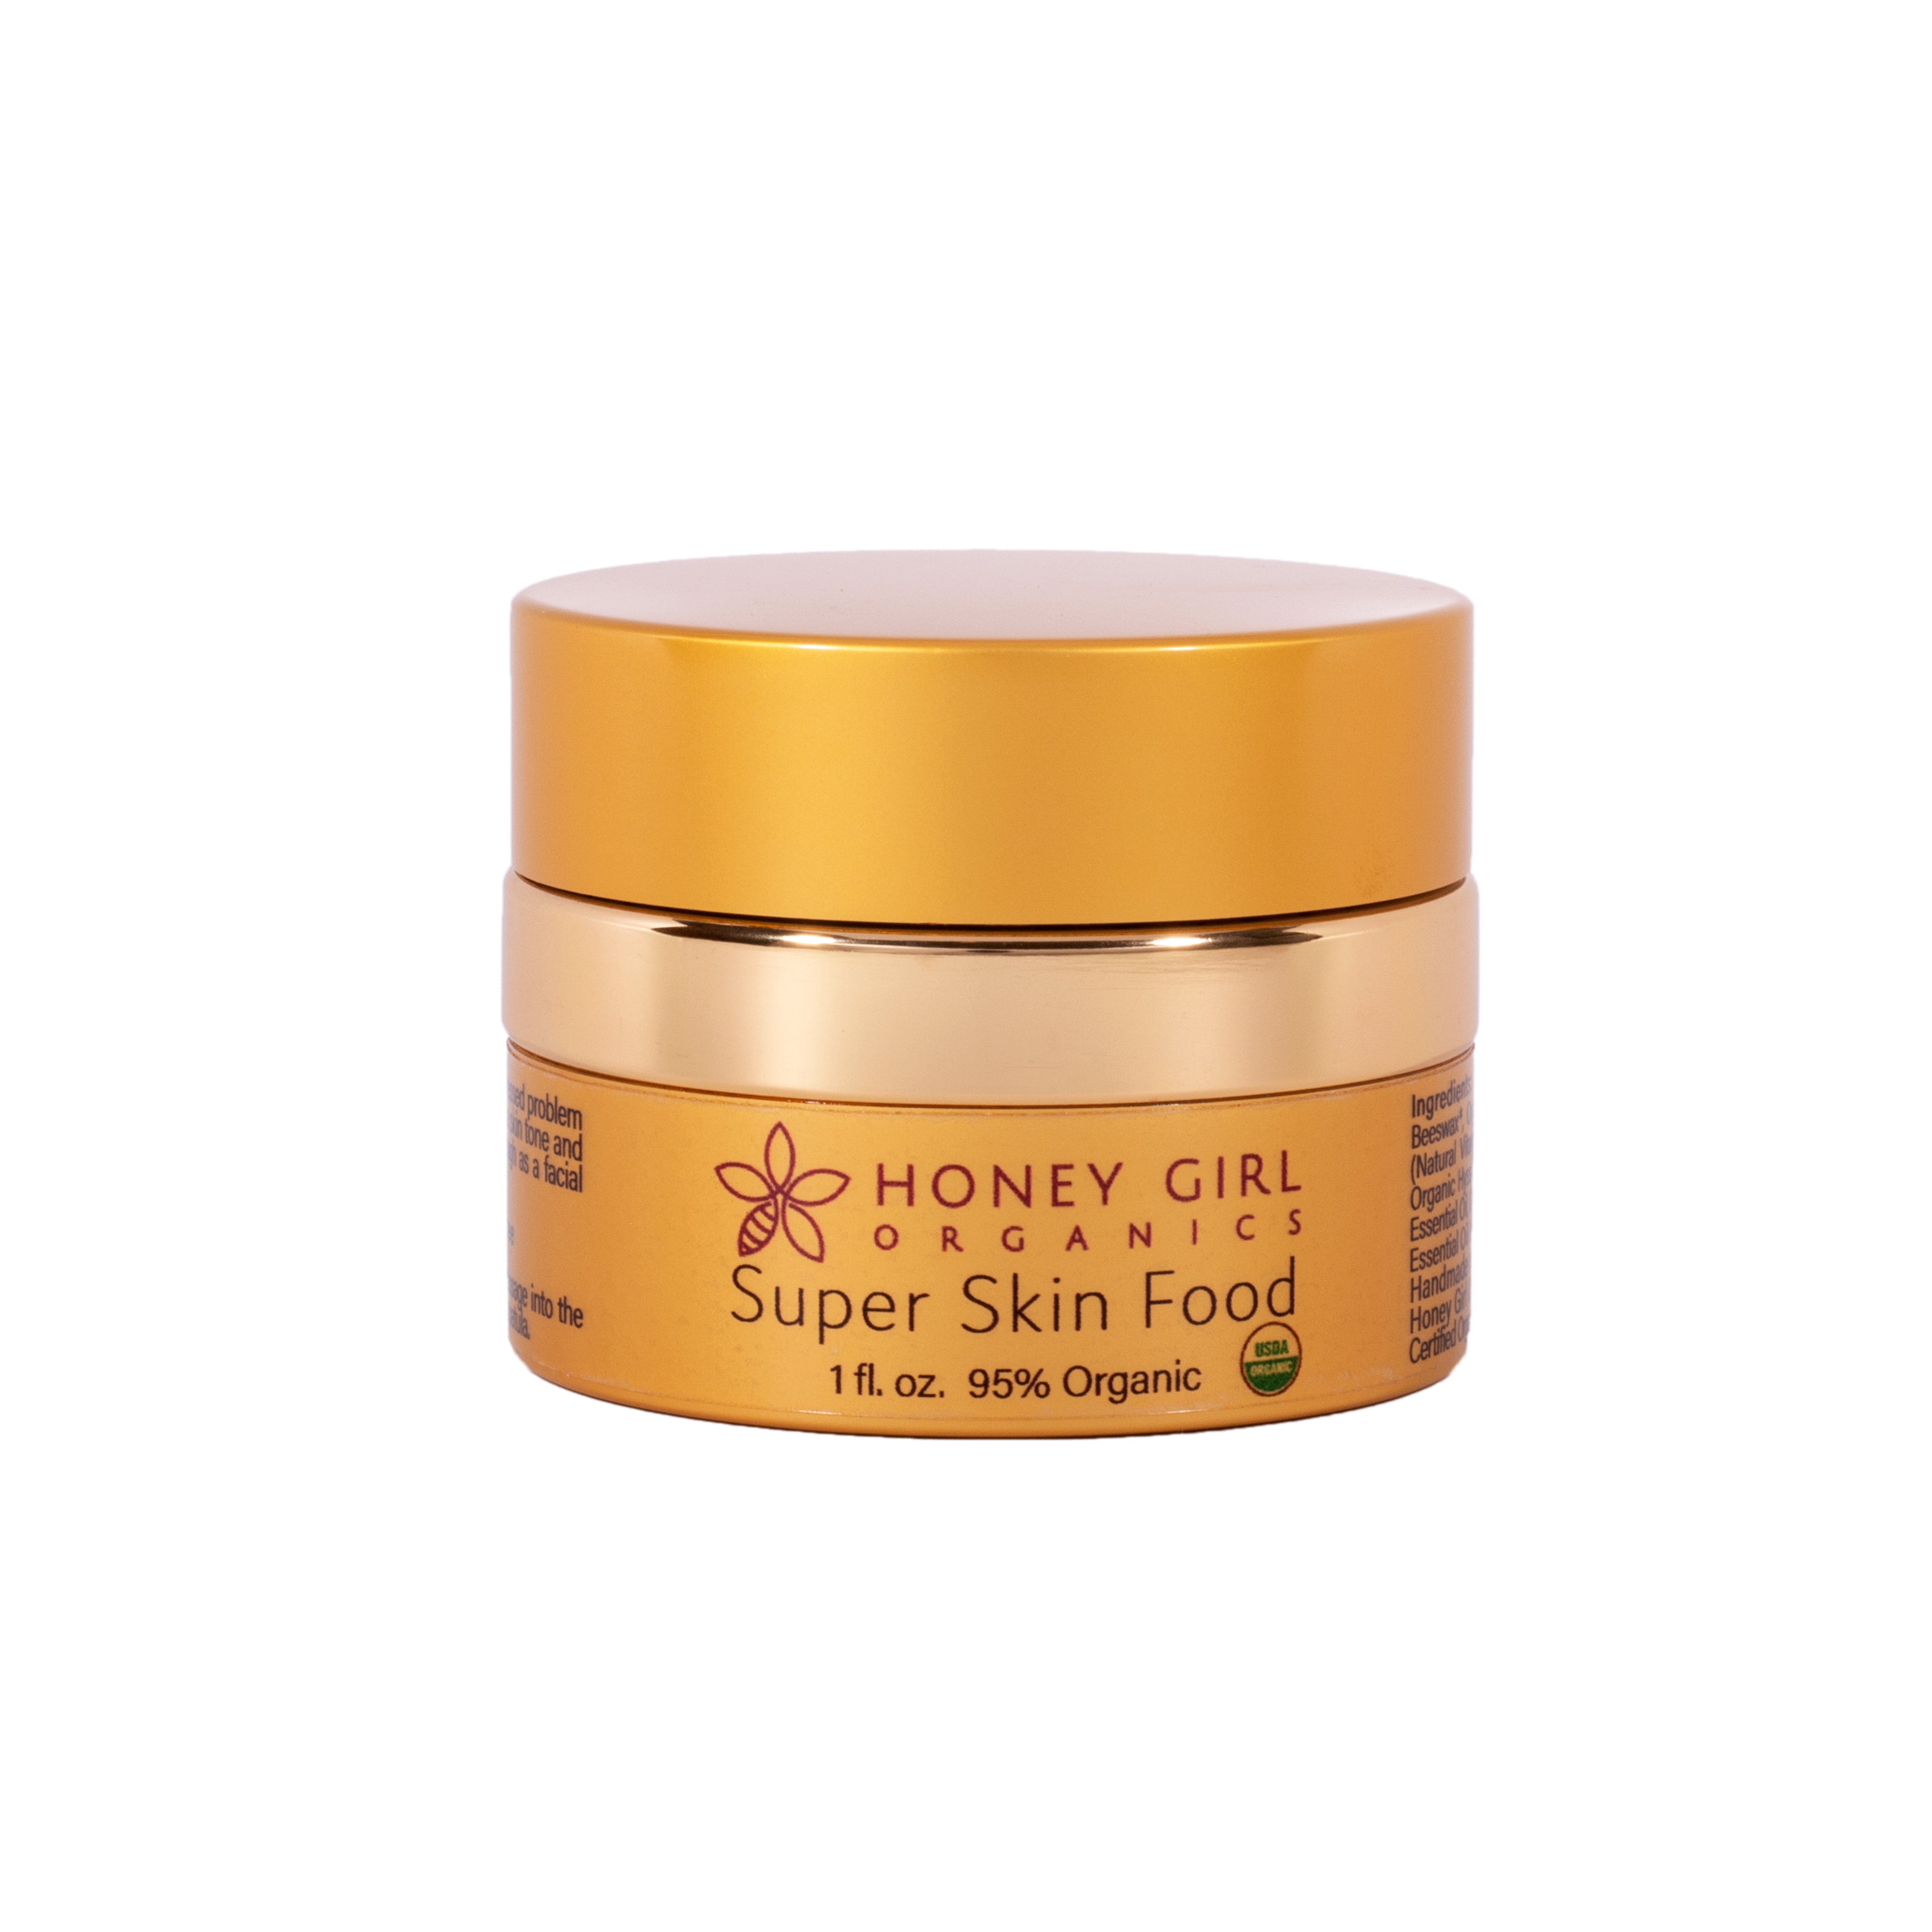 Honey Girl Organics Super Skin Food - 1 fl oz